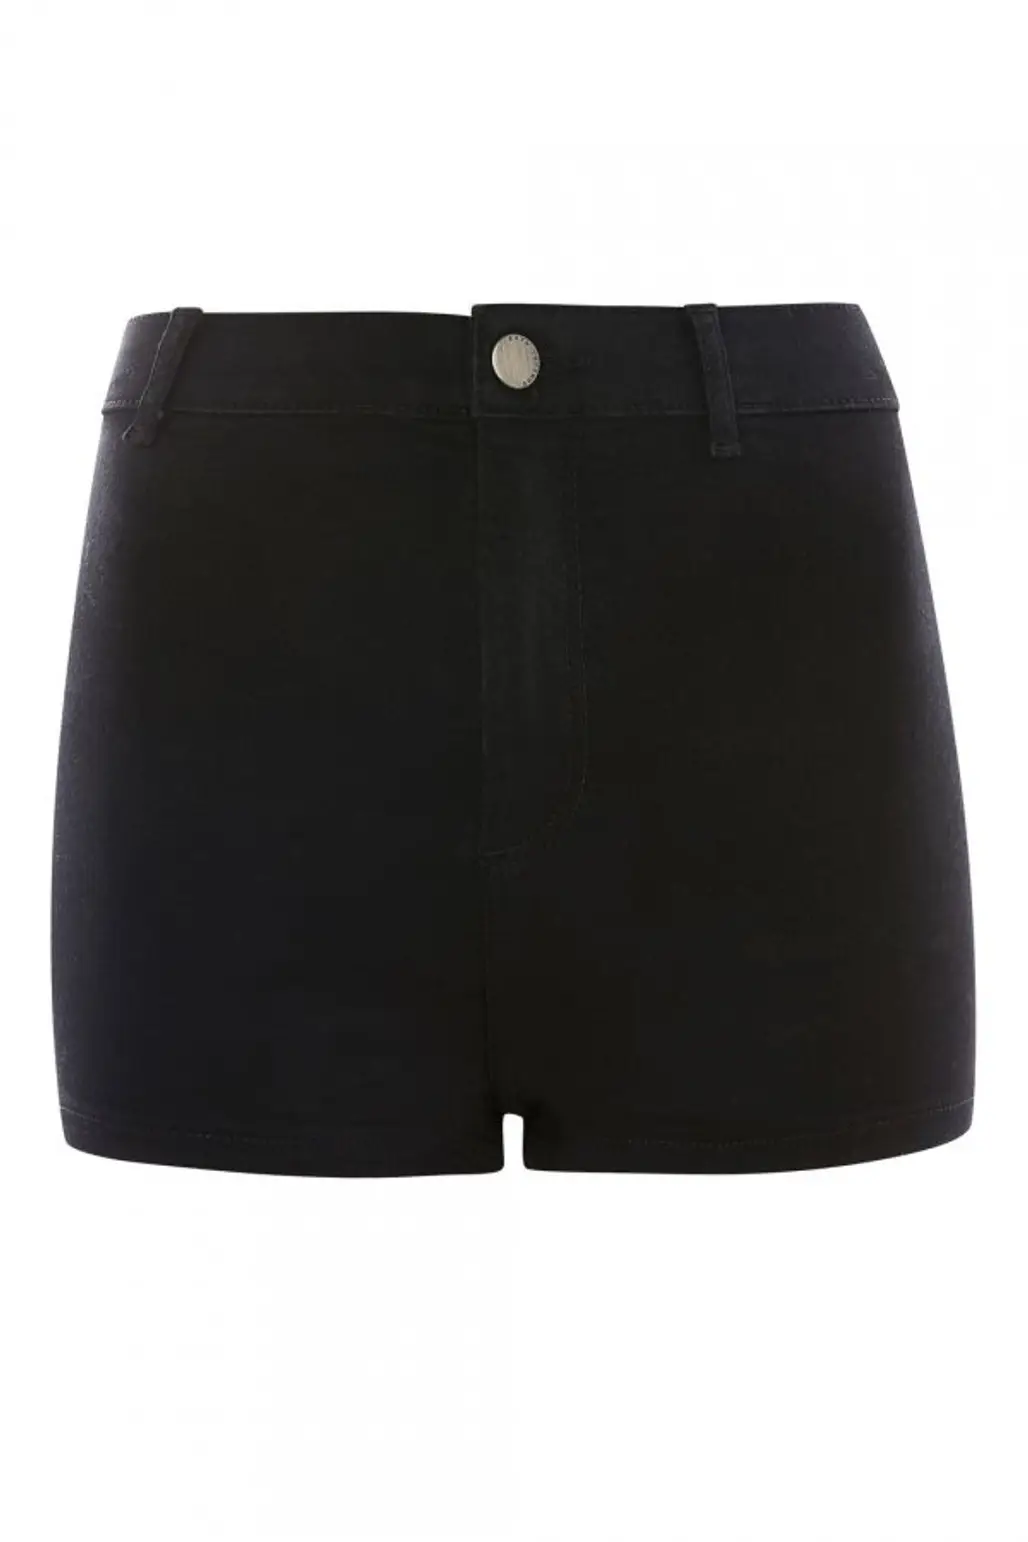 shorts, active shorts, waist, product design, pocket,